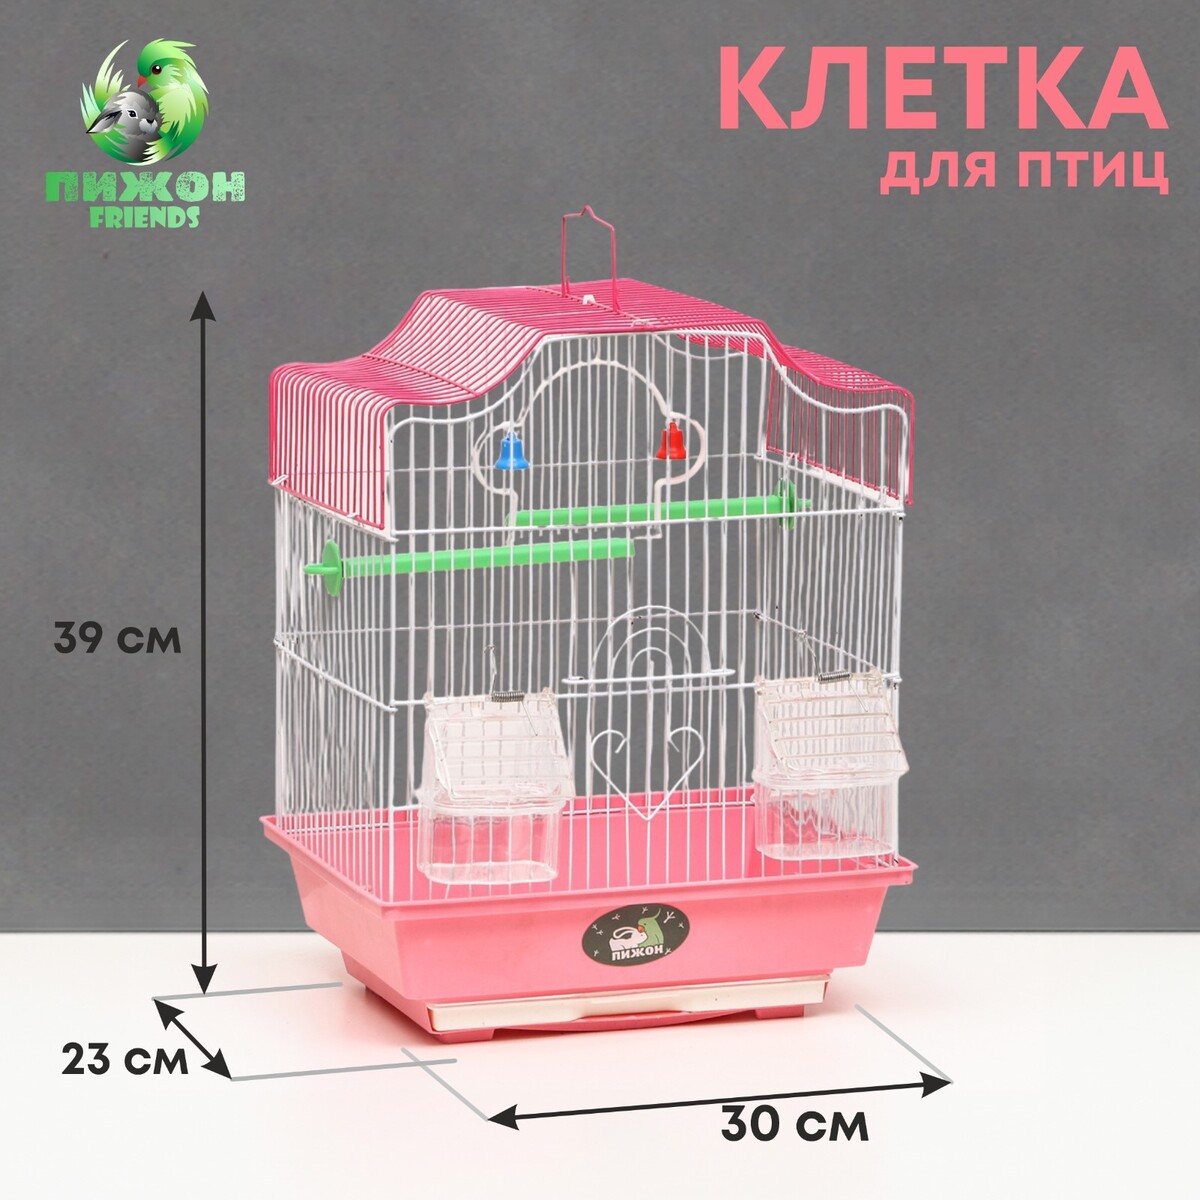 Клетка для птиц укомплектованная bd-1/4f, 30 х 23 х 39 см, розовая клетка для птиц двойная крыша укомплектованная 34 х 27 х 47 см красная